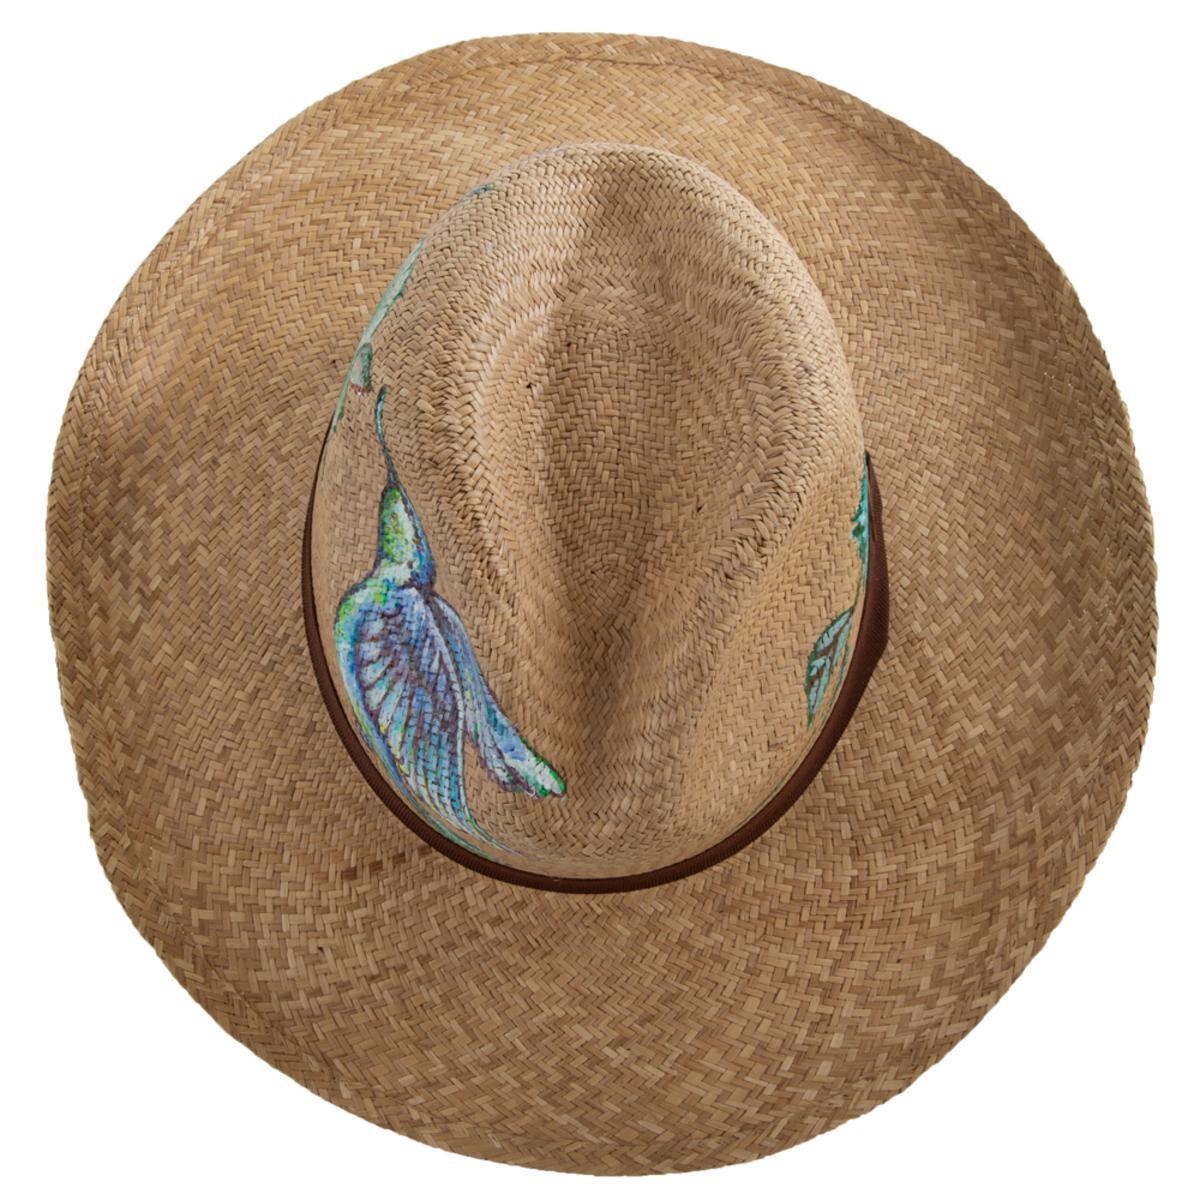 Colibri Brown Panama Hat Size L